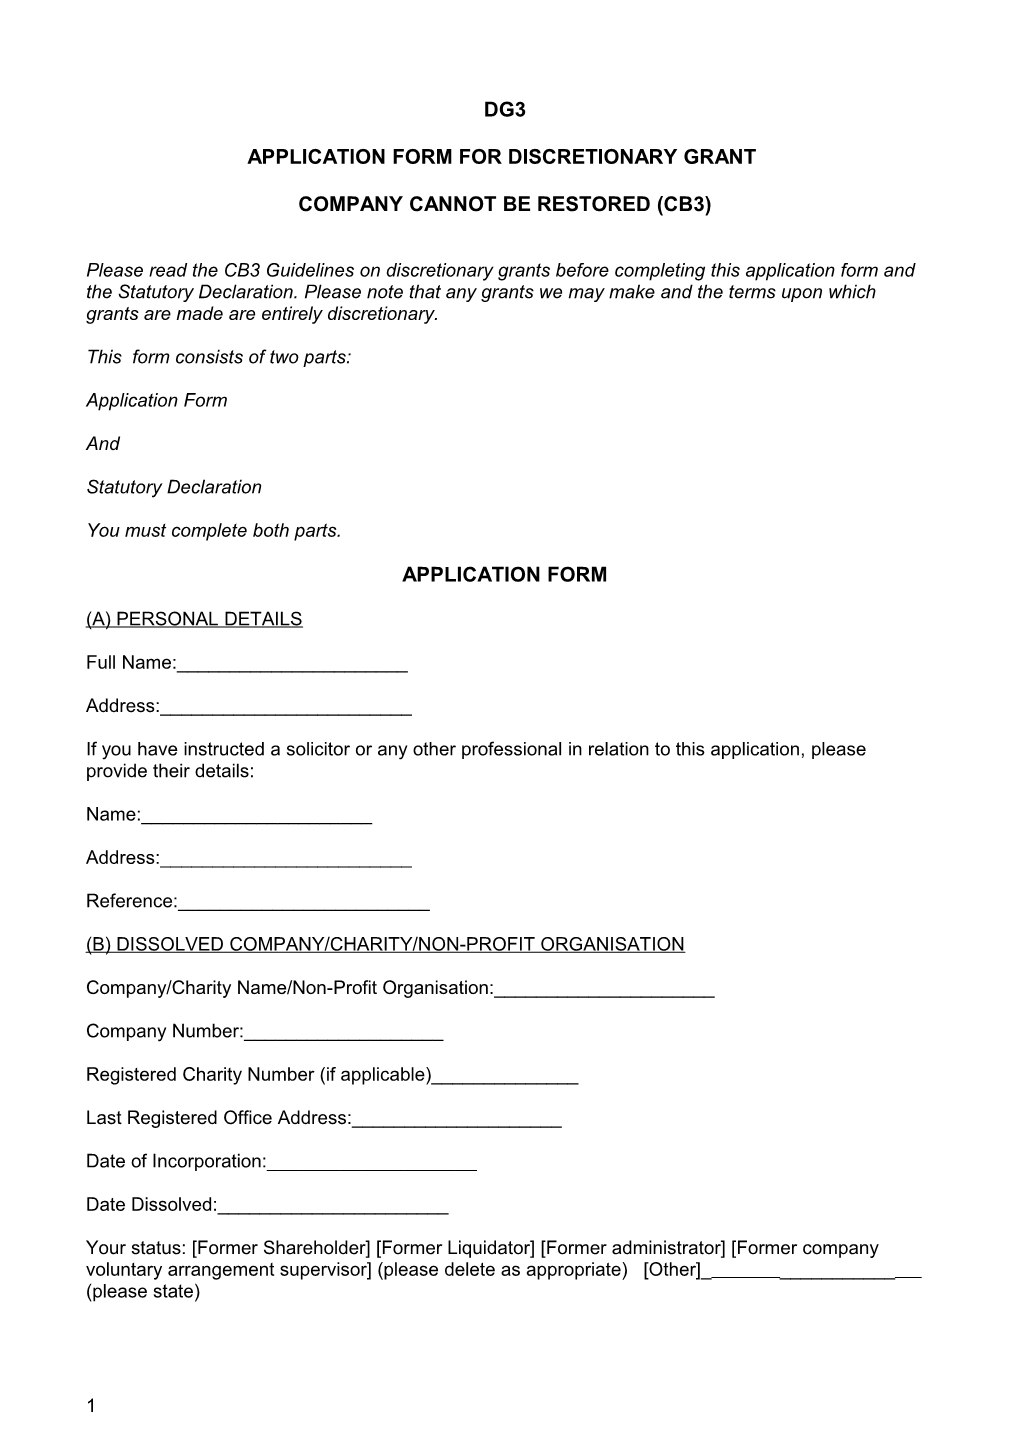 Application Form for Discretionary Grant